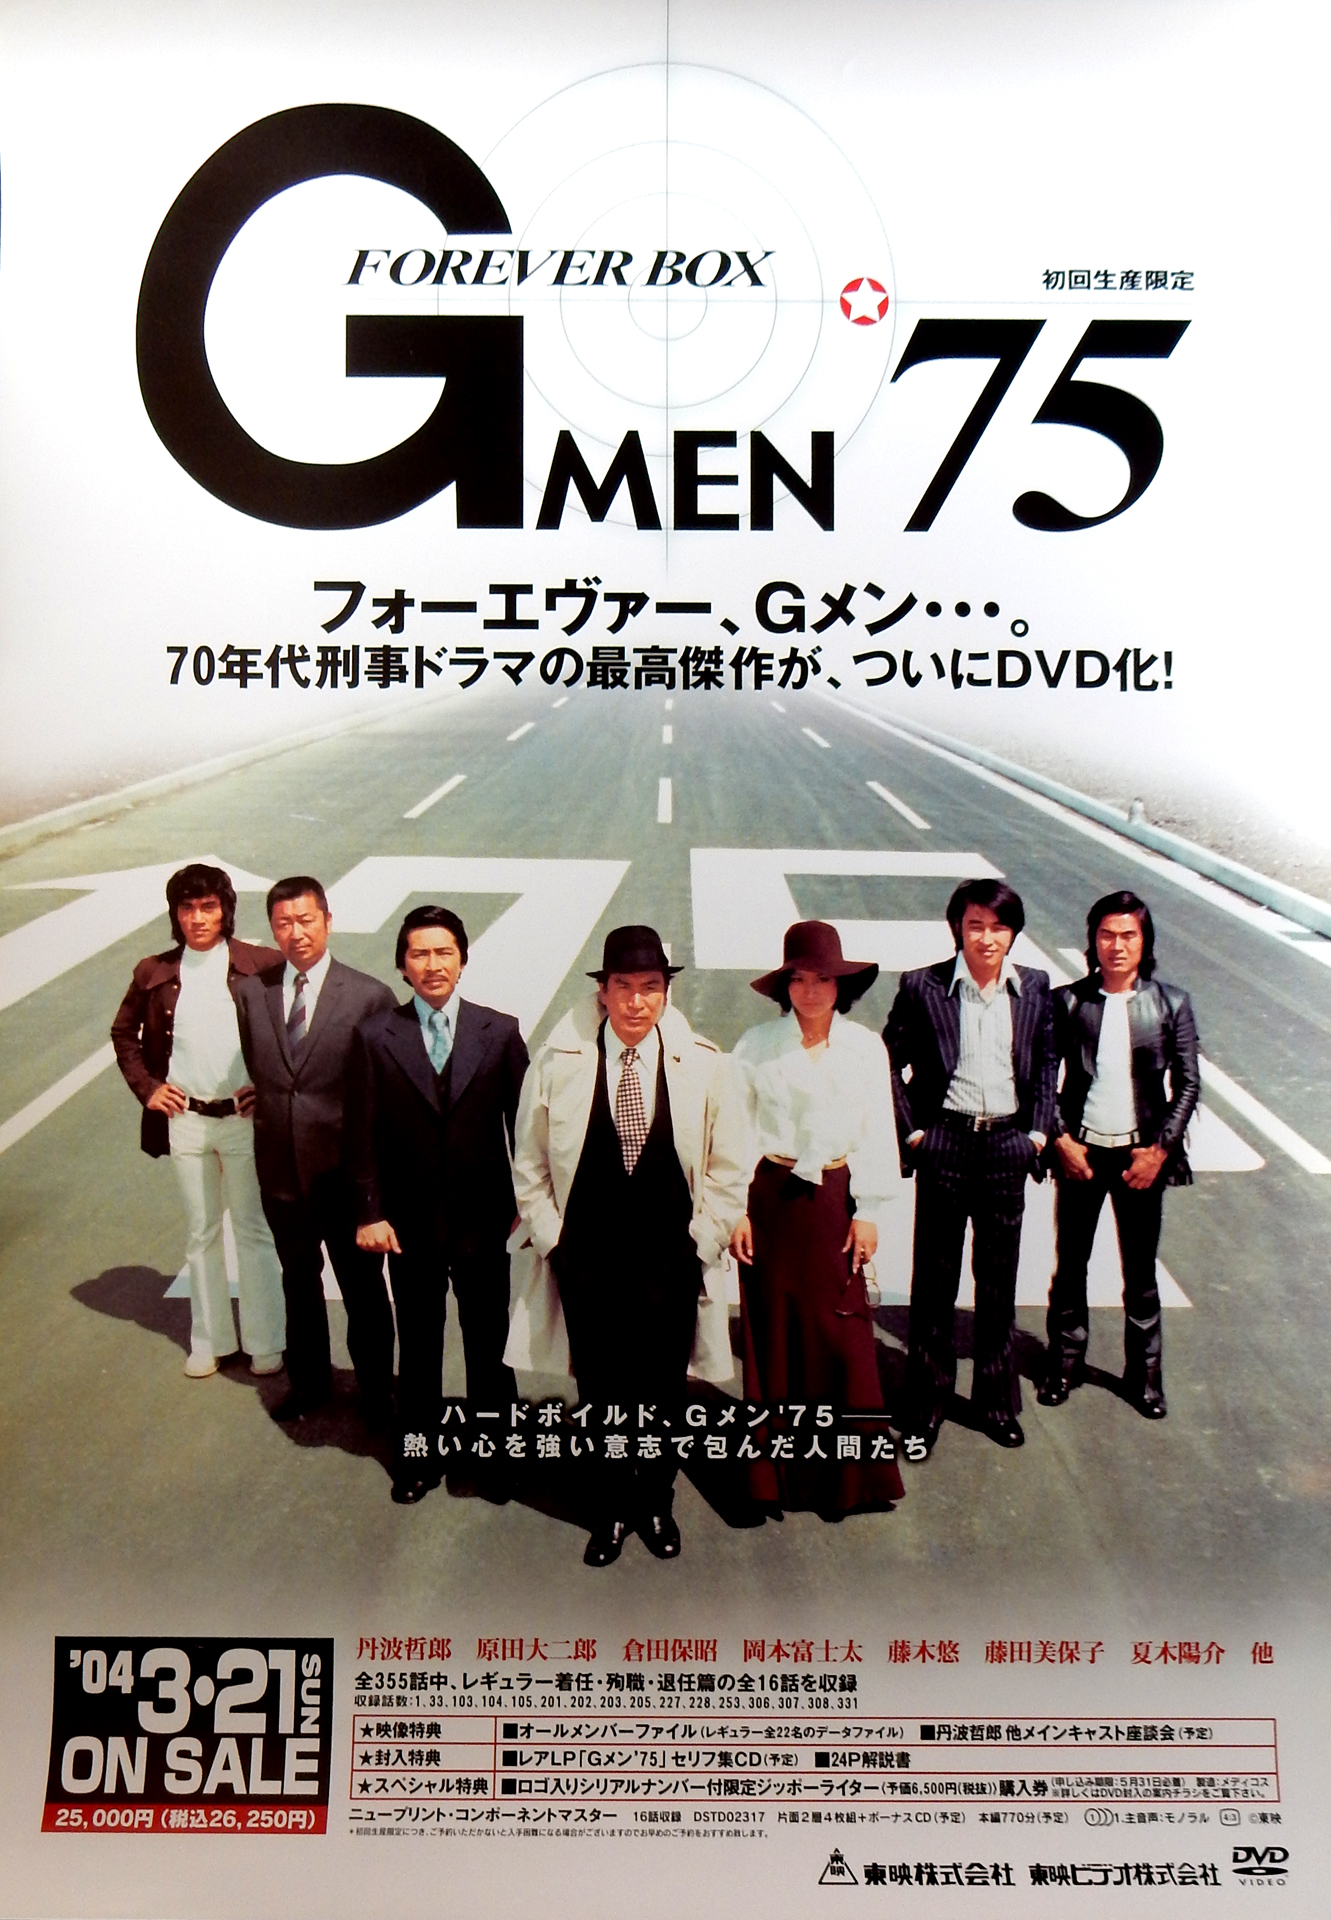 Gメン'75 FOREVER BOX （丹波哲郎）のポスター